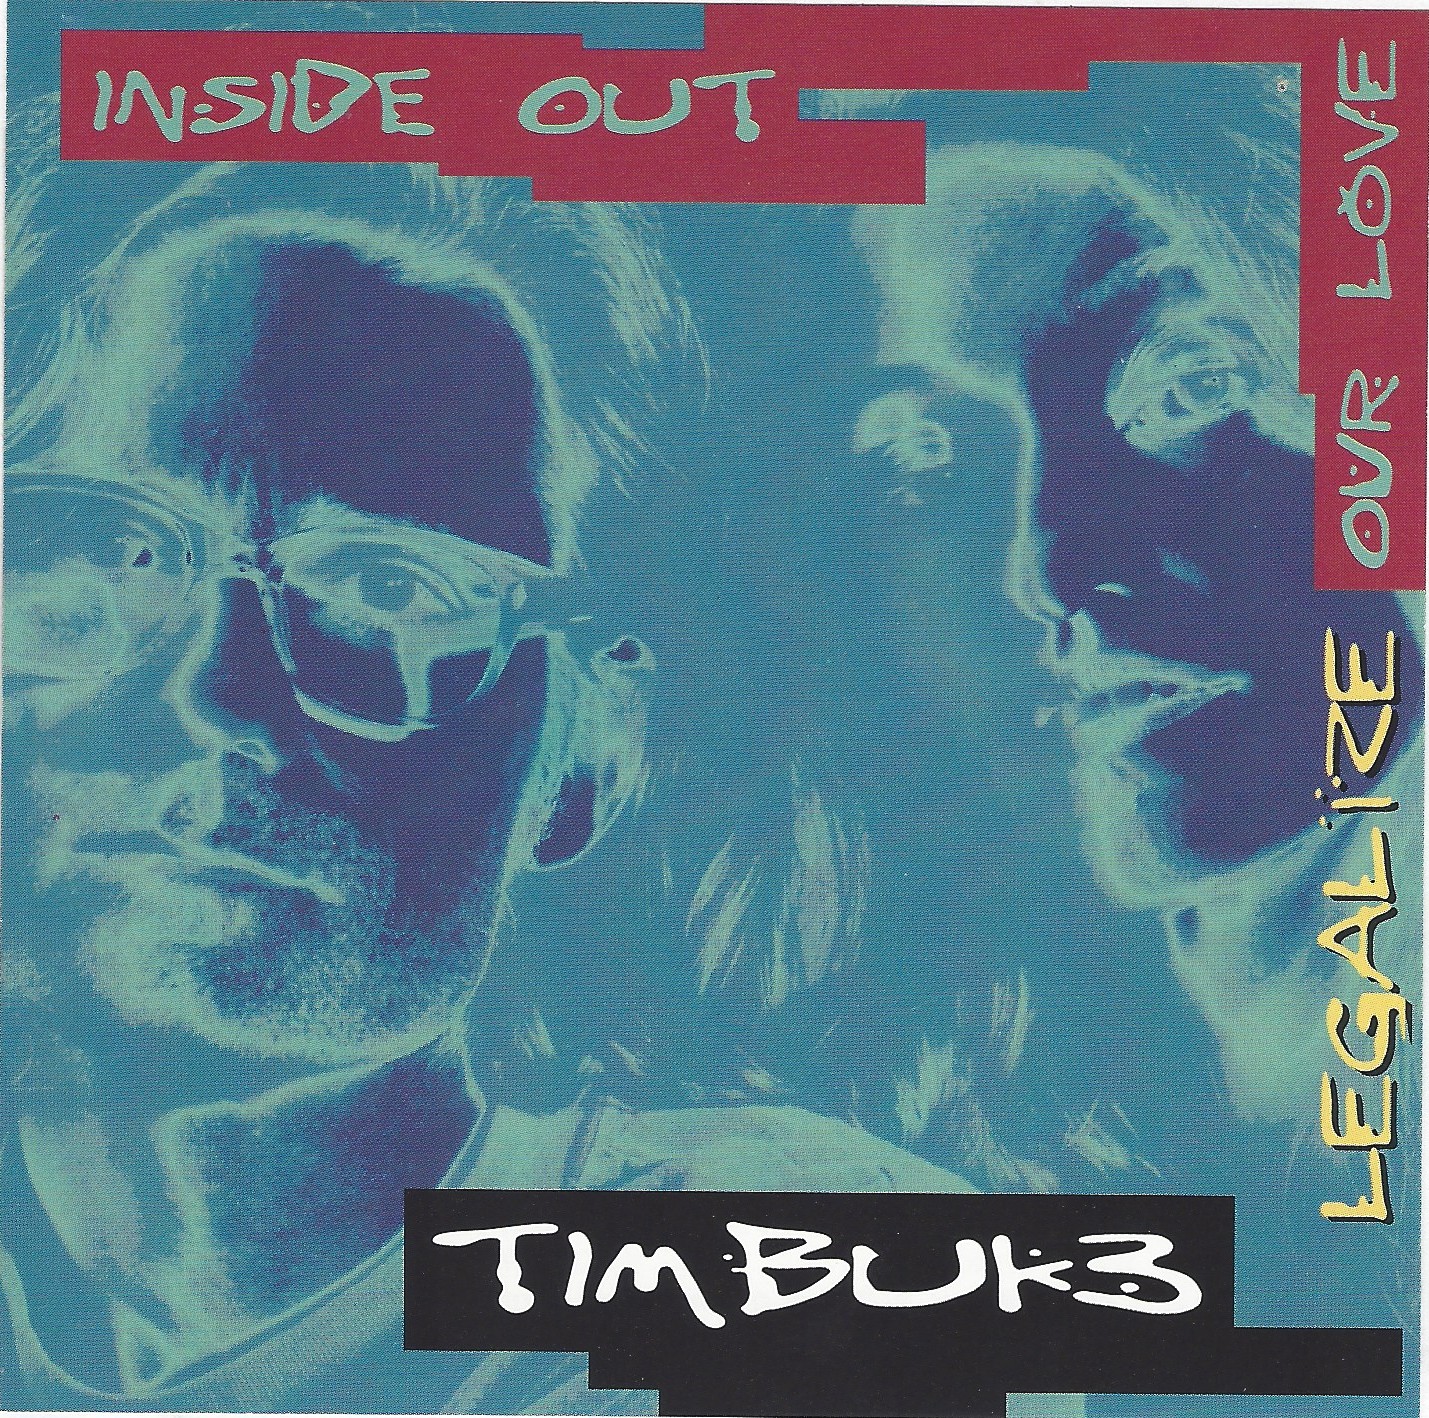 Timbuk3_1994-1995RadioSpots (2).jpg